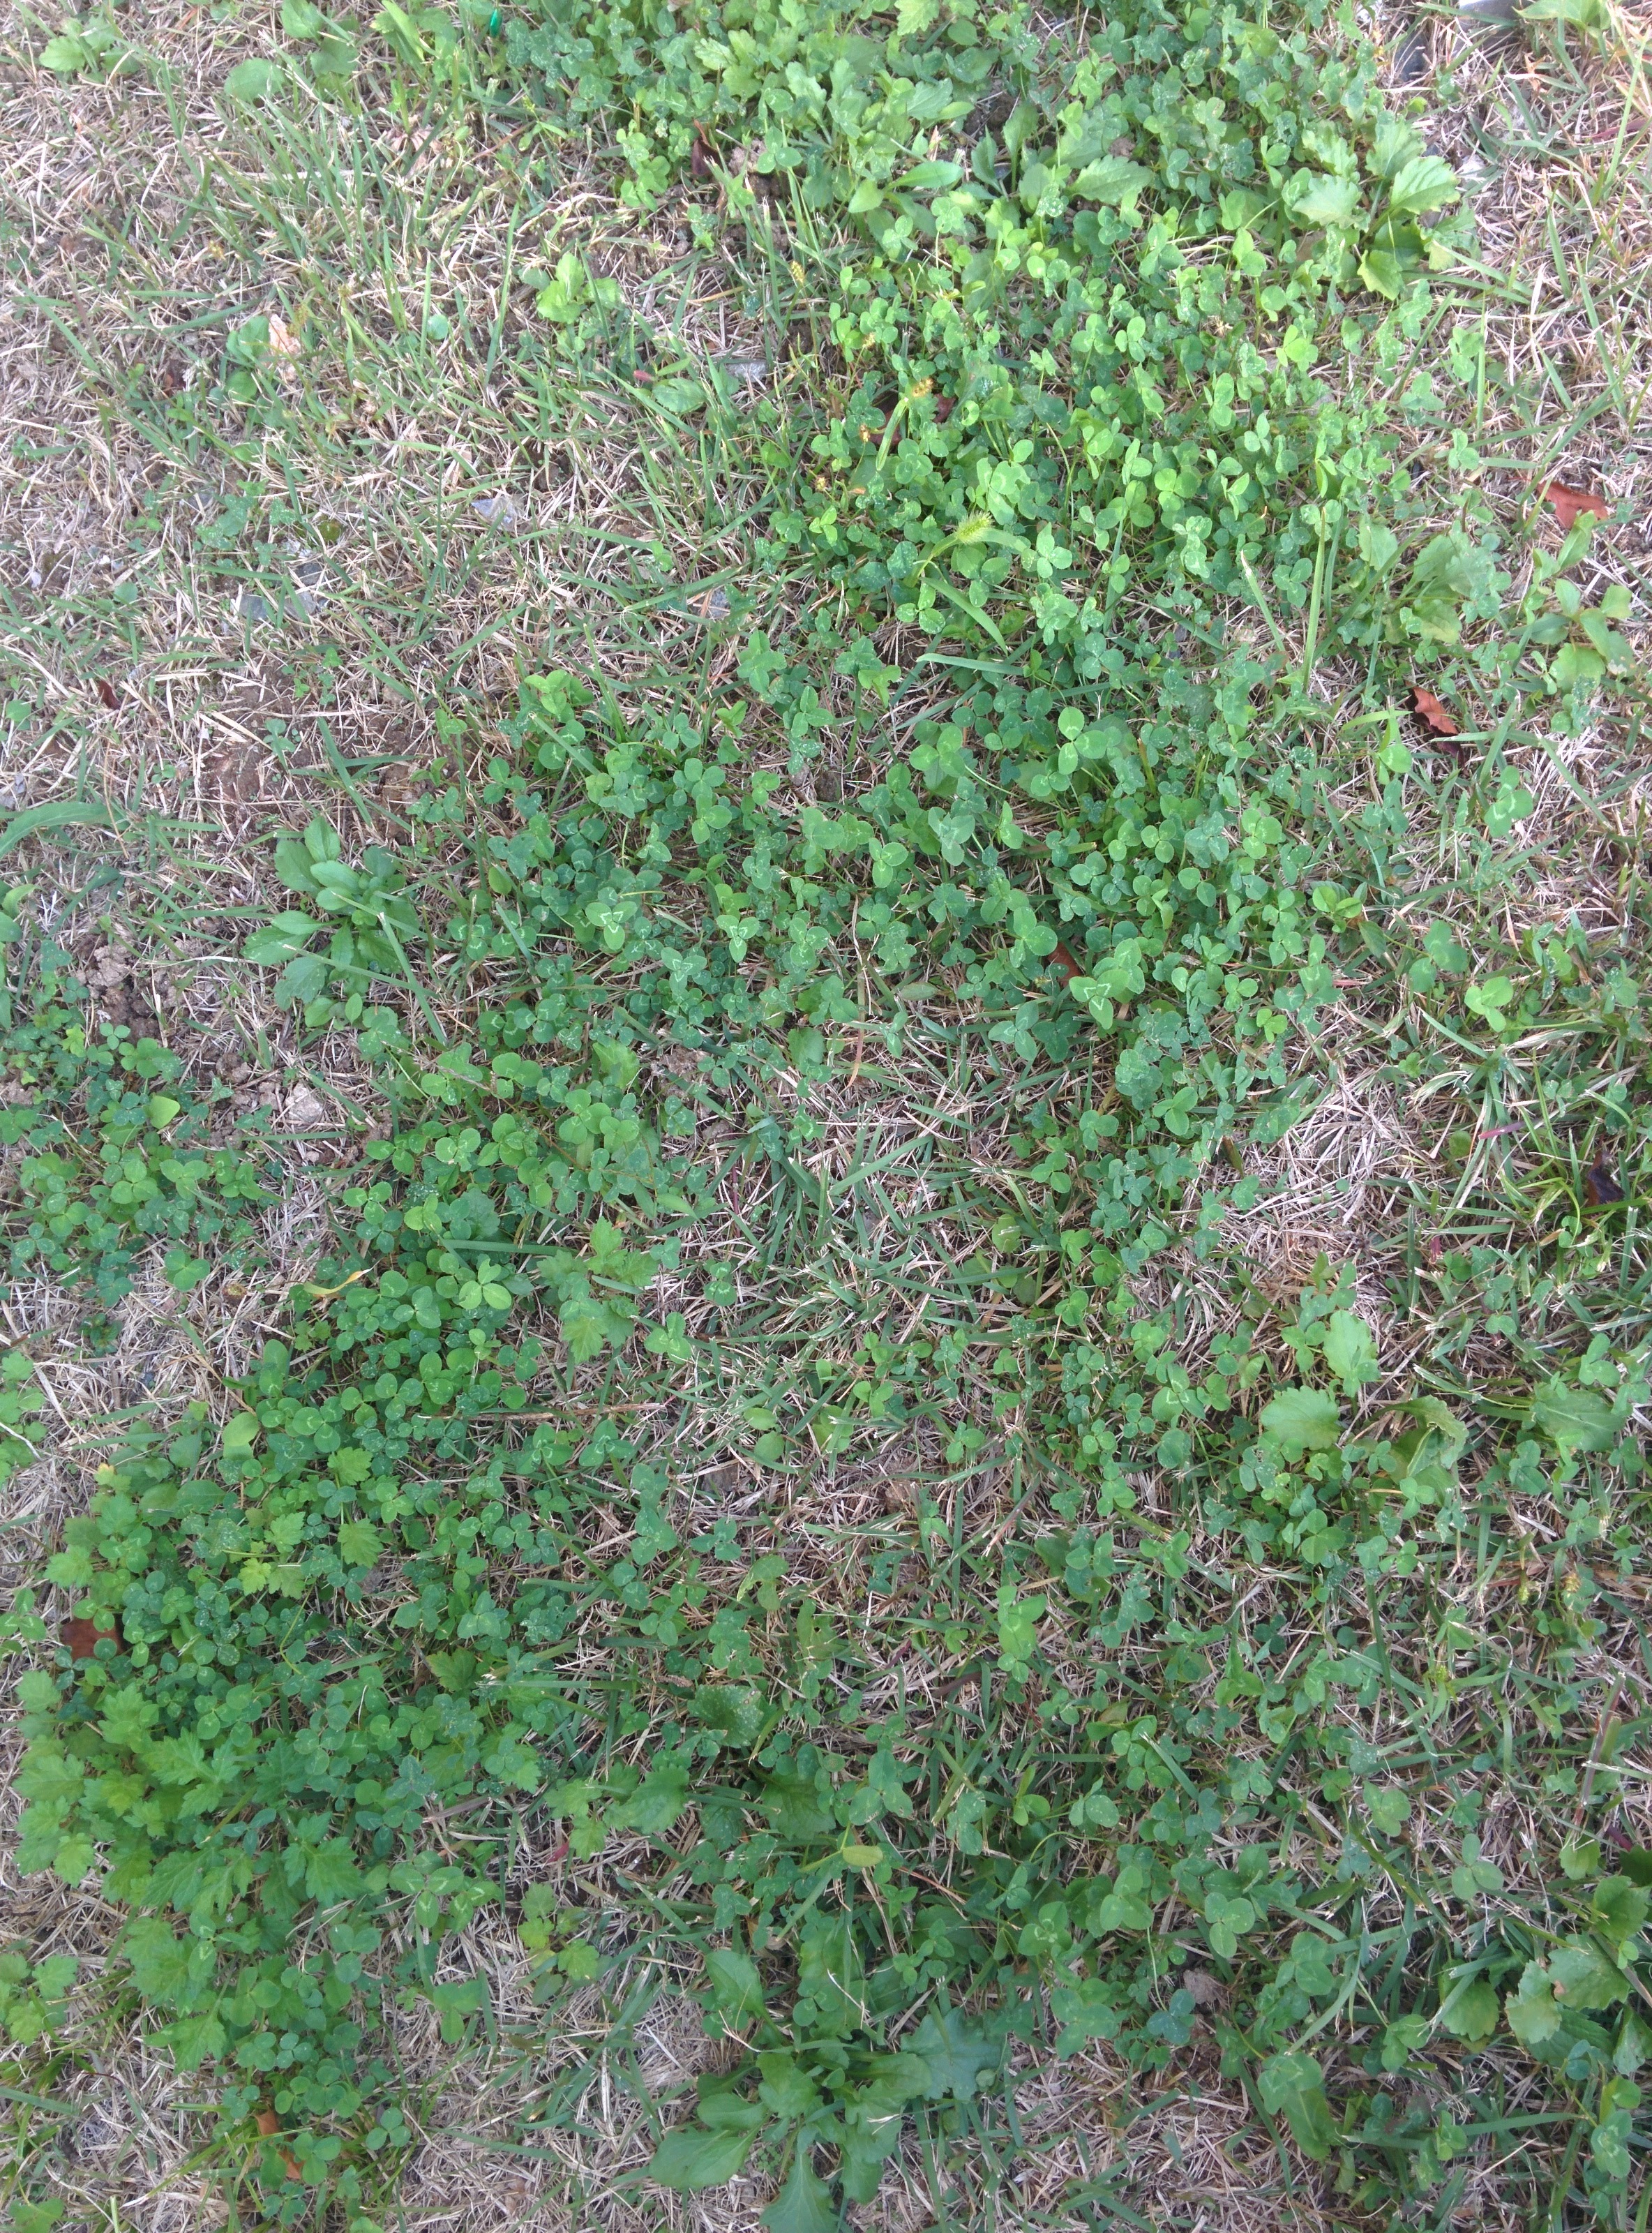 IMG_20151013_161107.jpg 잔디밭에서 자라는 토끼풀... 모두 세잎클로버.